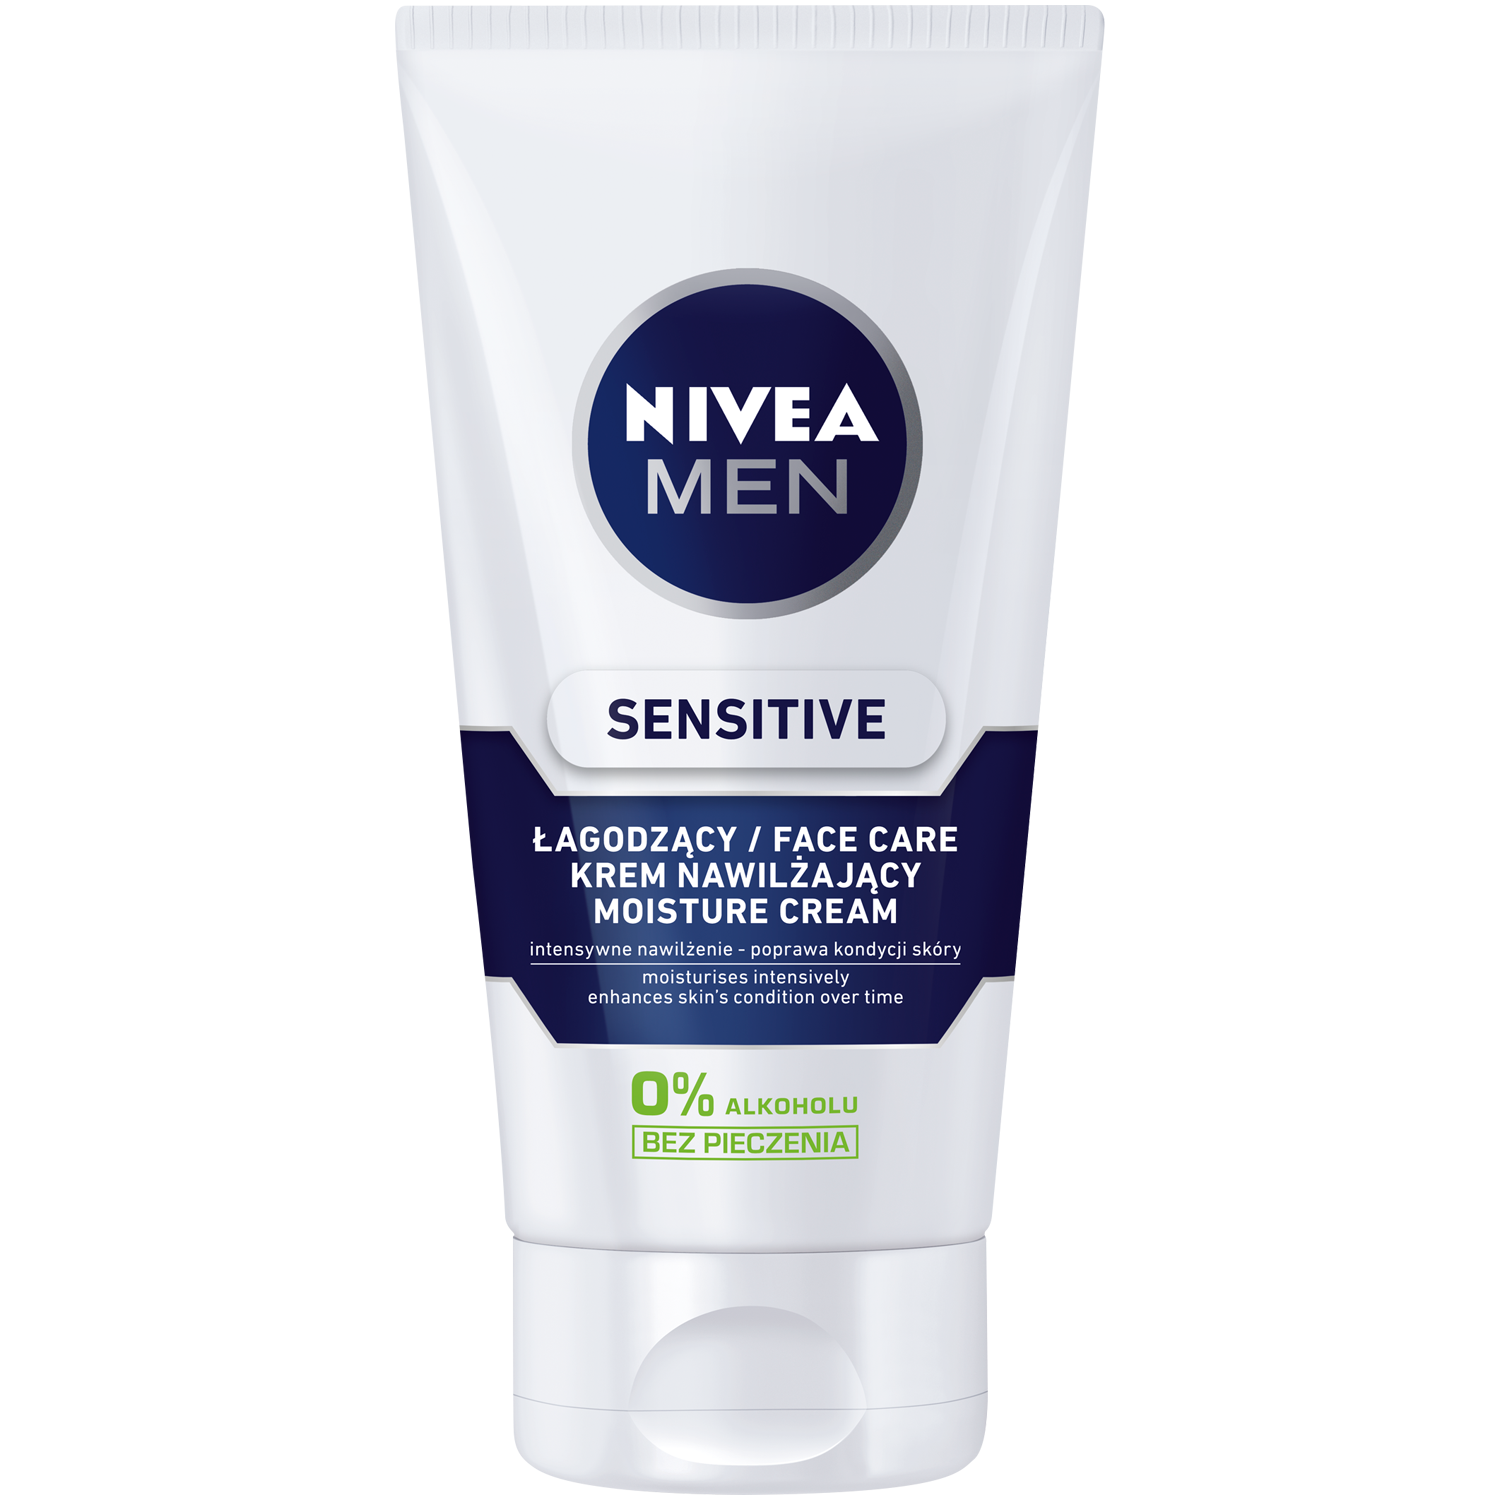 Nivea Men Sensitive успокаивающий увлажняющий крем для лица для мужчин, 75 мл крем для лица nivea men 75 мл